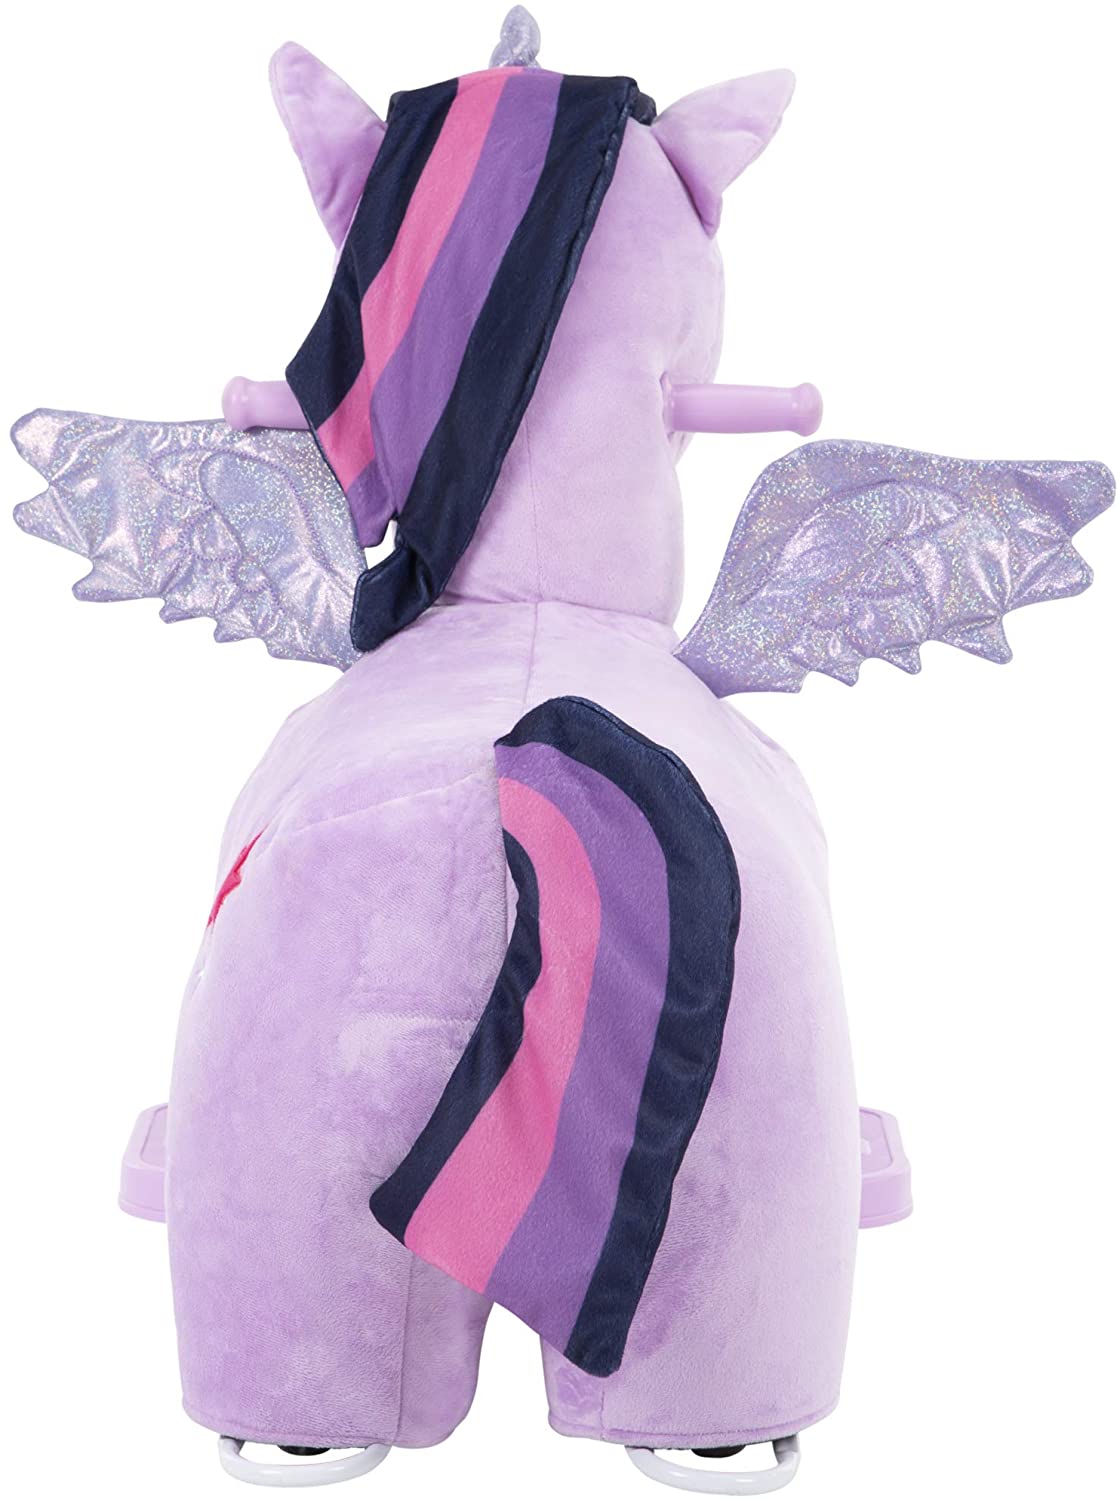 MLP Princess Twilight Sparkle Plush Quad Toy 3